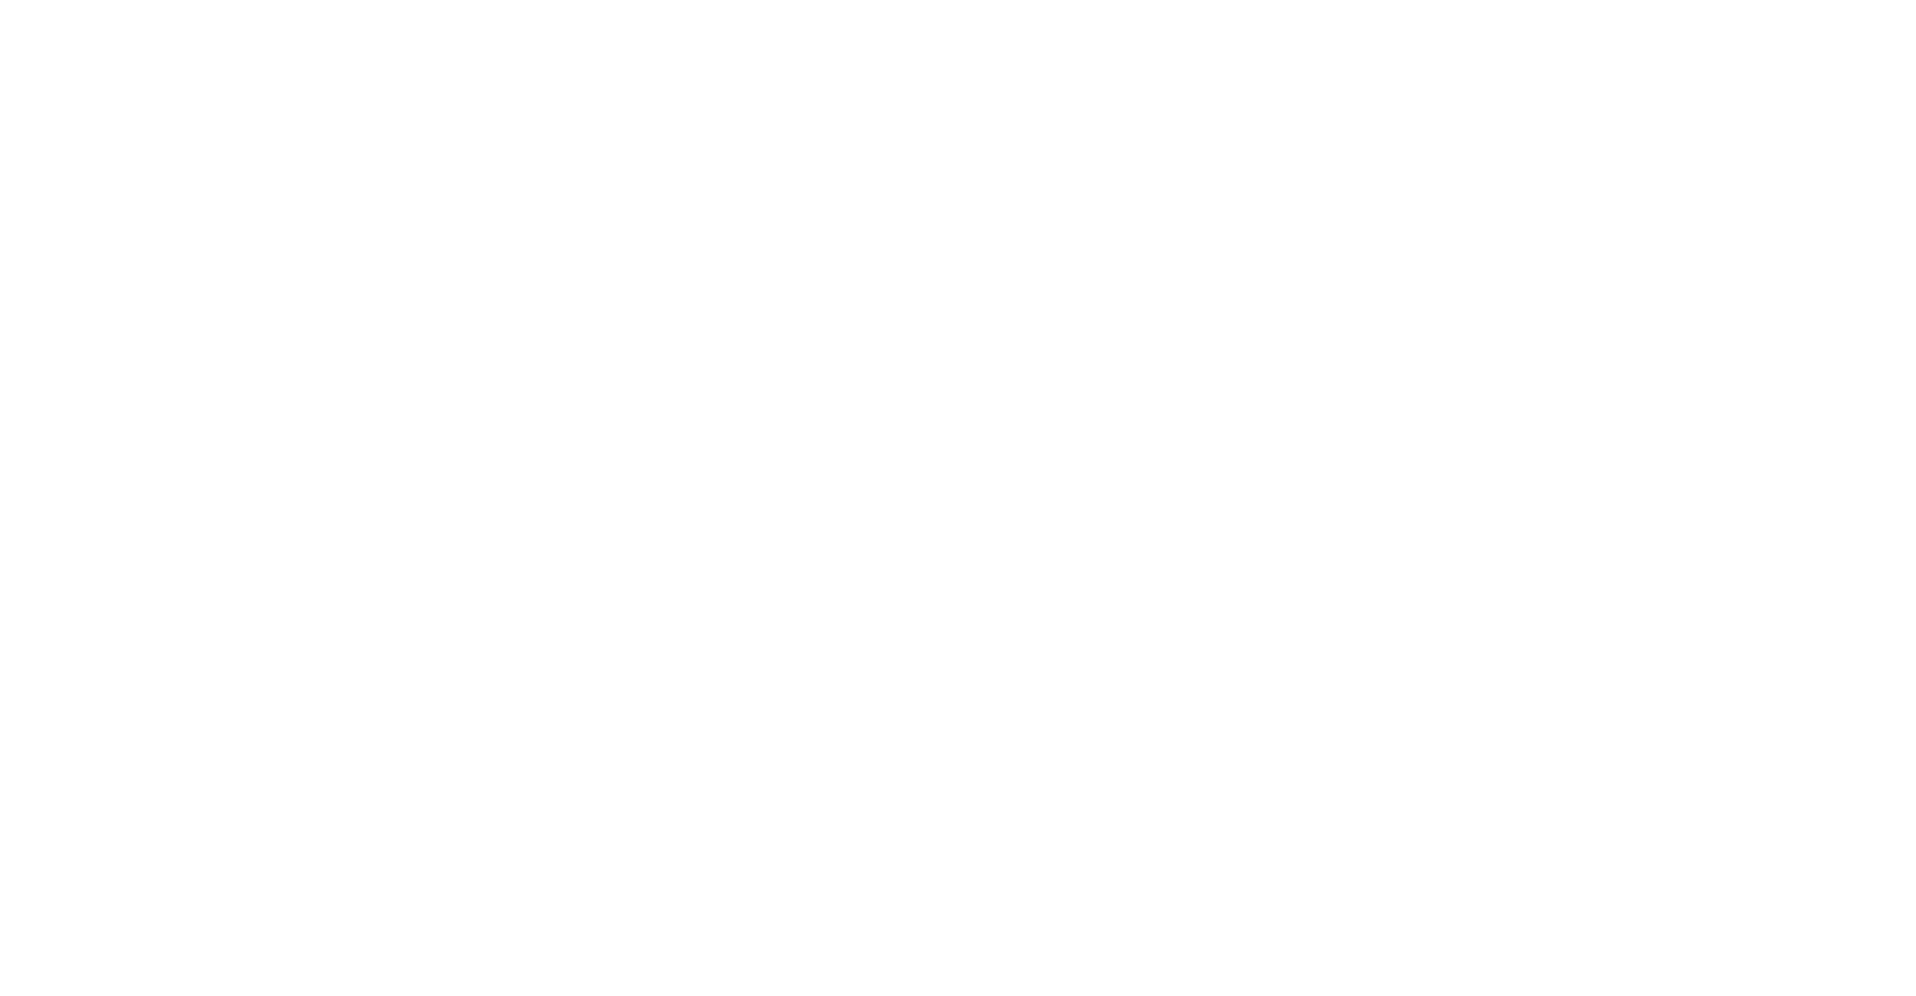 St. Charles Parish Assessor's Office